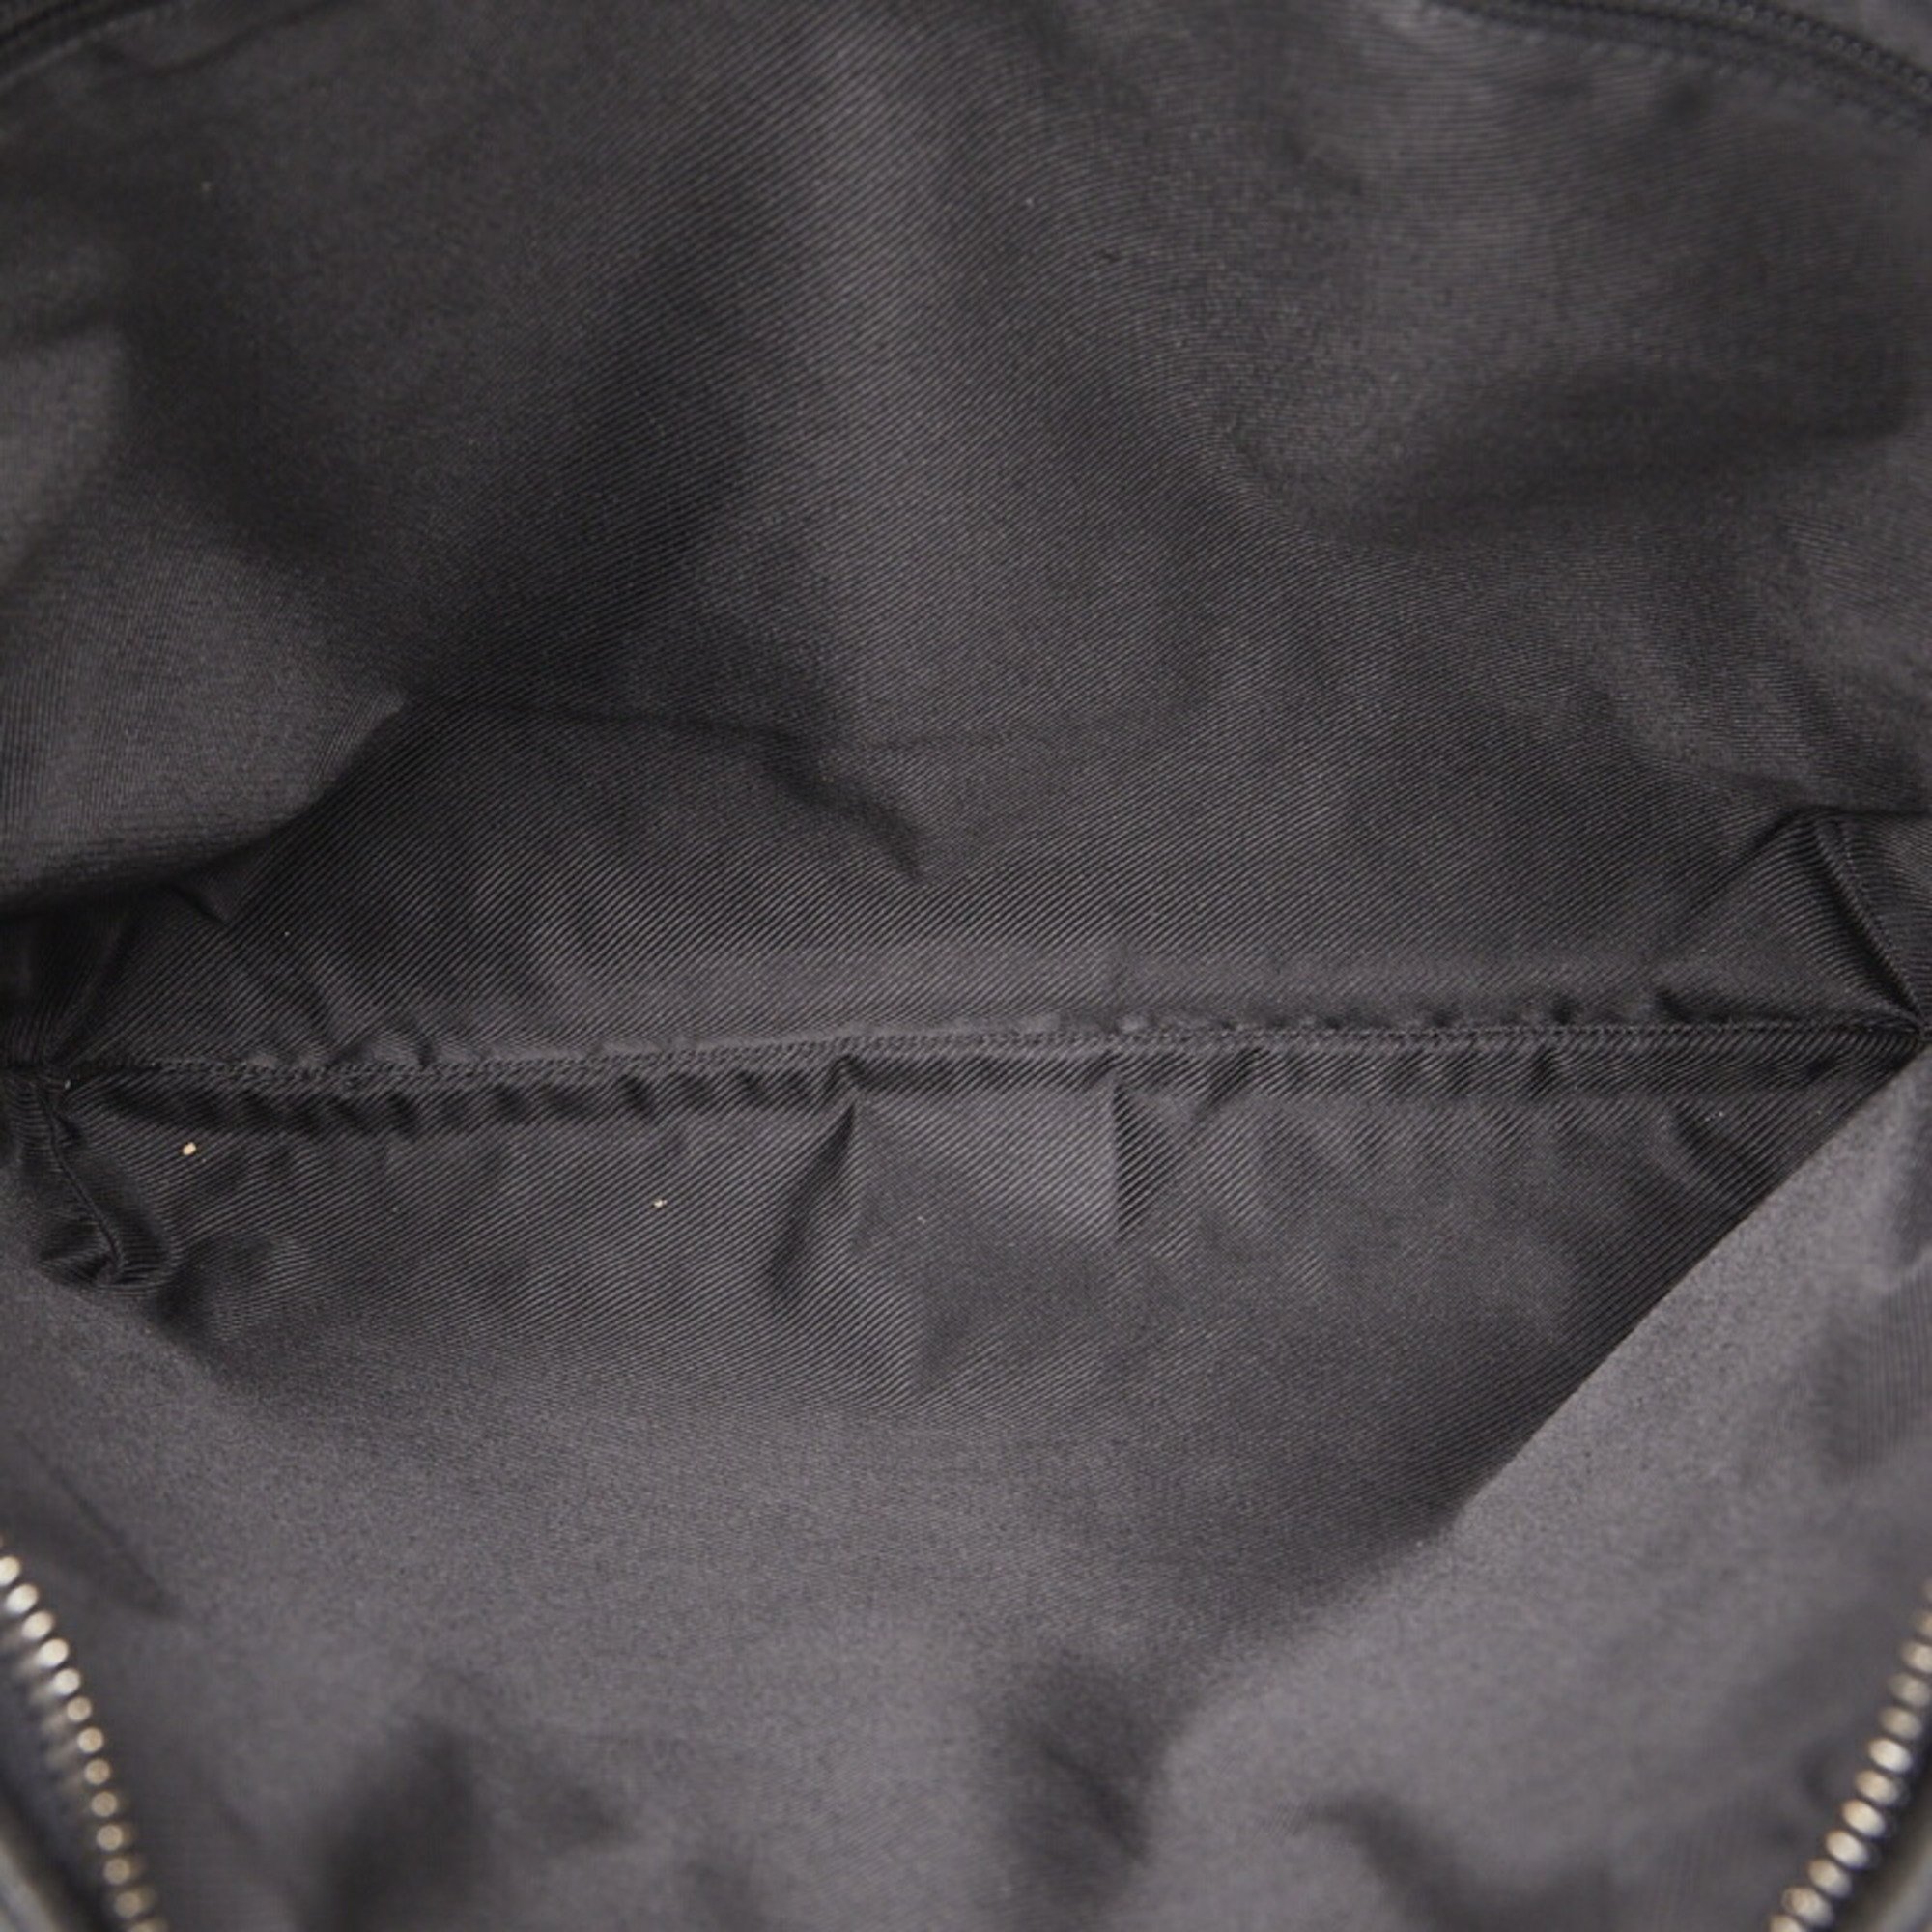 Gucci GG canvas handbag tote bag 122797 black leather ladies GUCCI